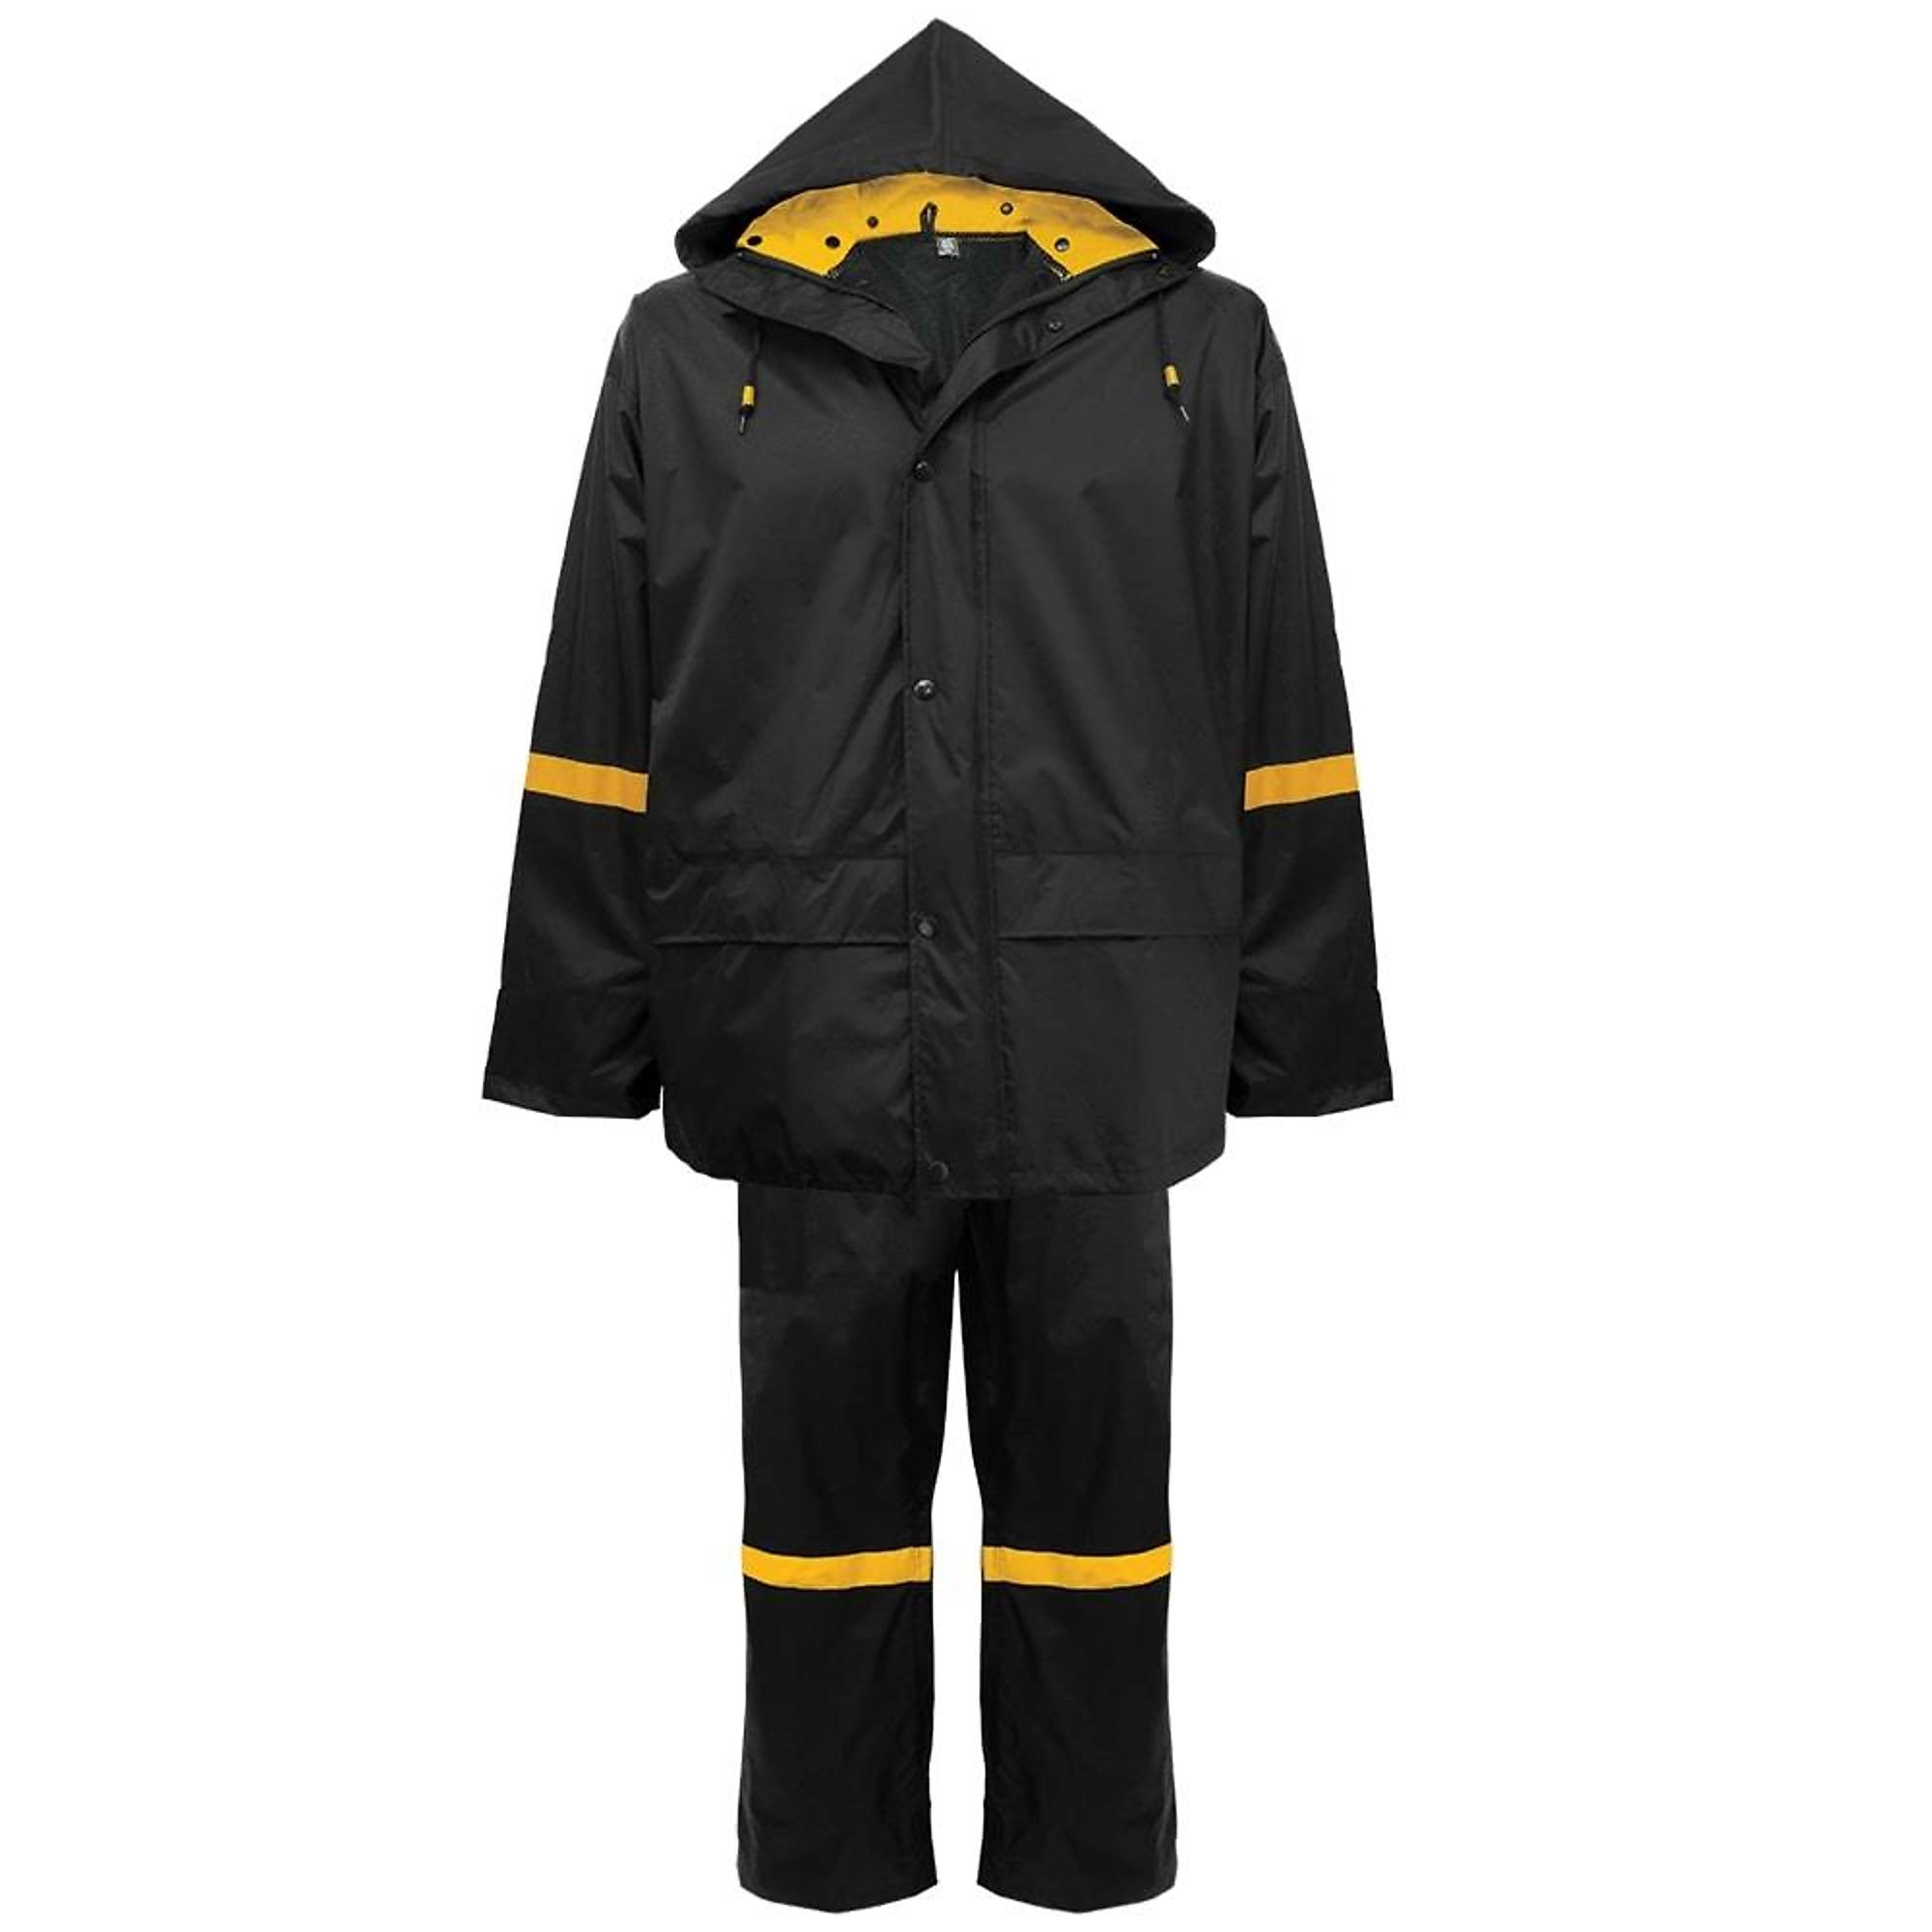 FrogWear, Black, PVC Coated, Nylon Three-Piece Rain Suit, Size 4XL, Color Black/Yellow, Model R6400-4XL